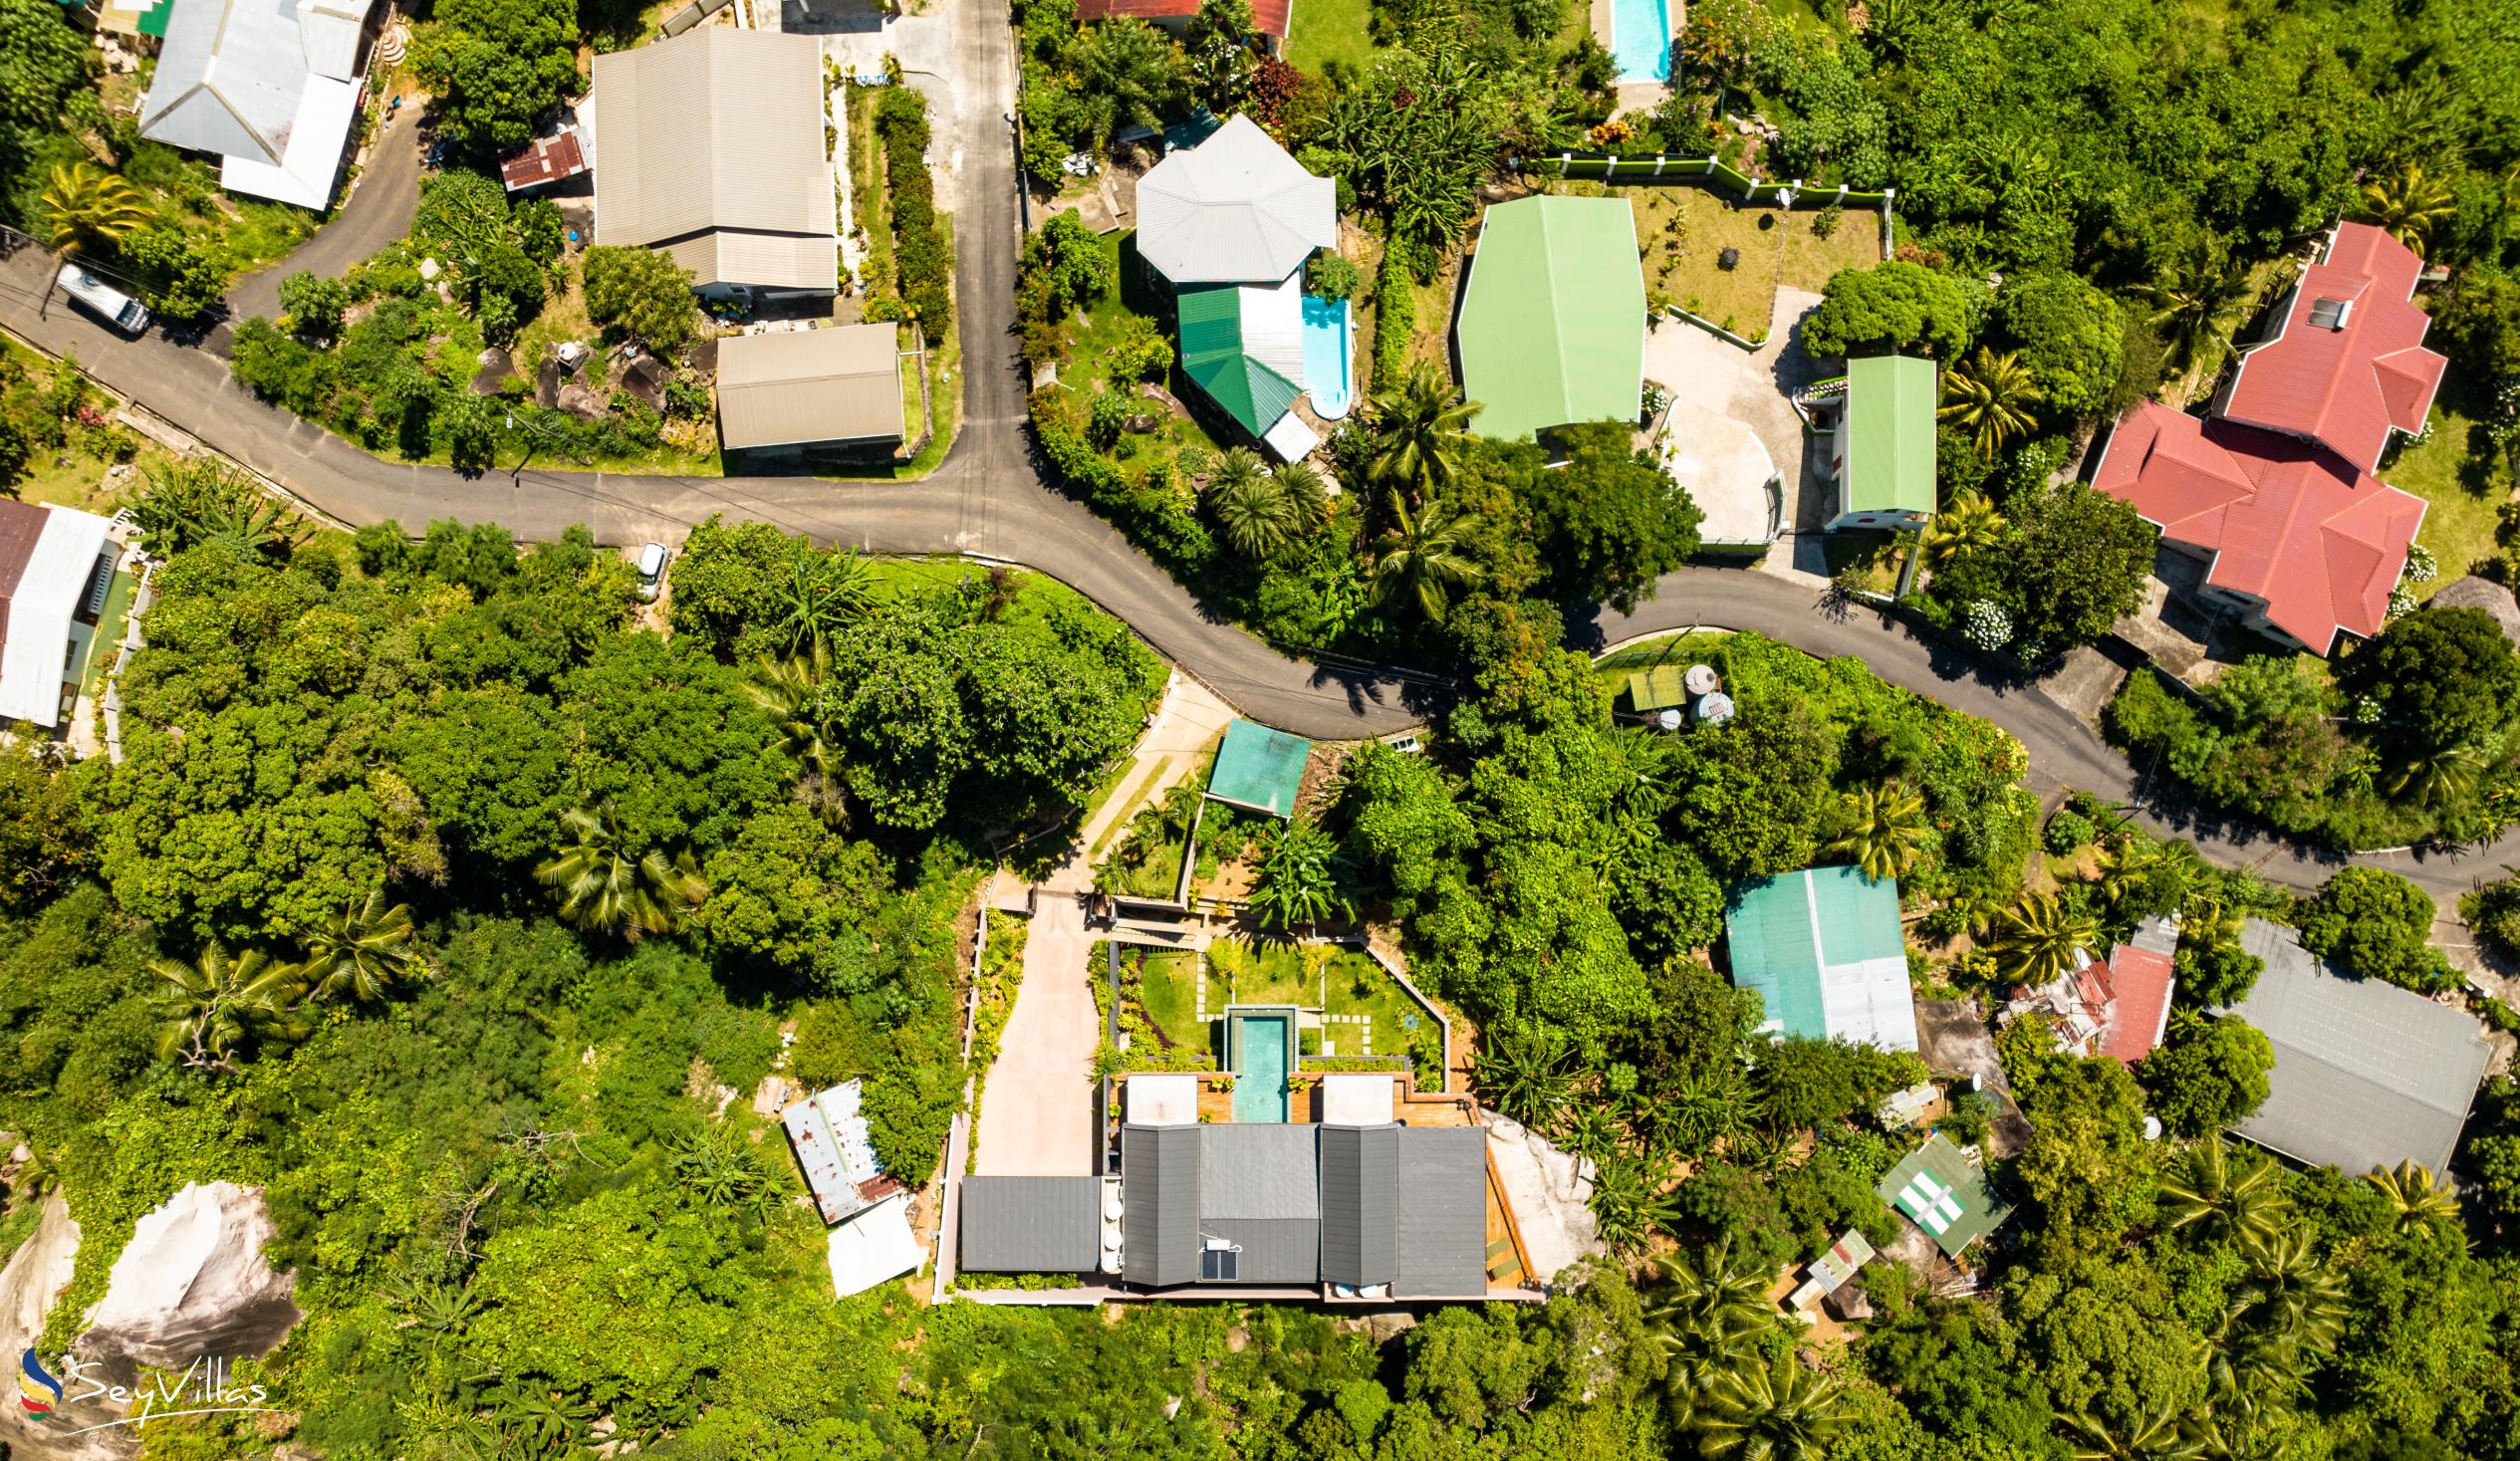 Foto 14: Maison Gaia - Aussenbereich - Mahé (Seychellen)